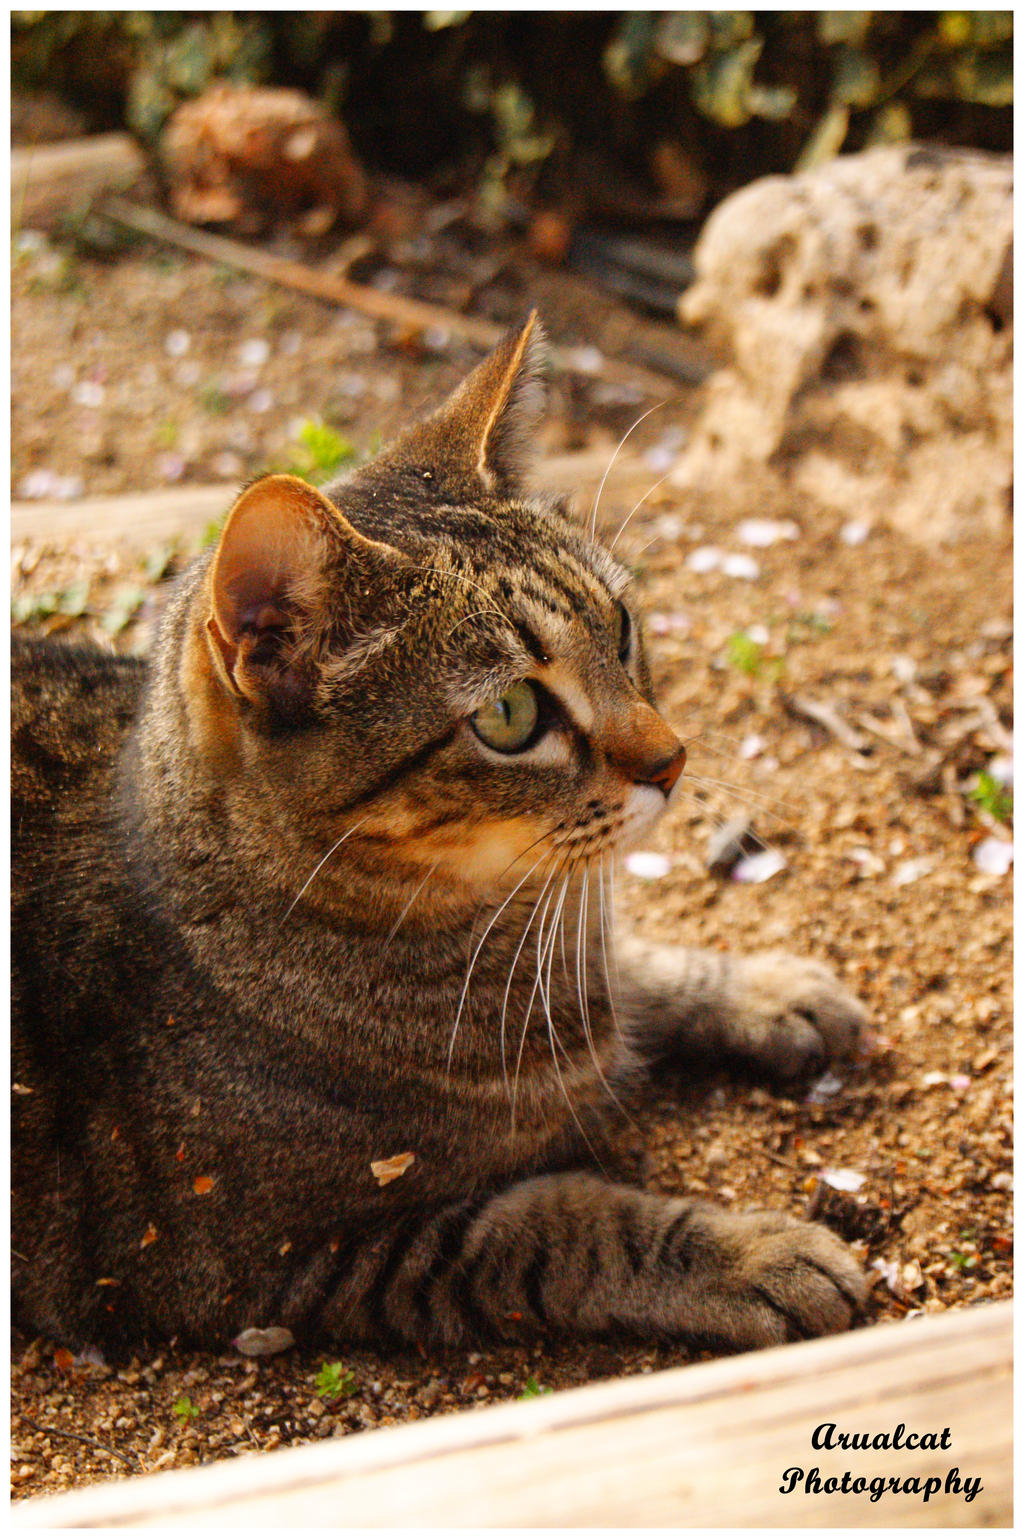 Cat in the garden by arualcat on DeviantArt